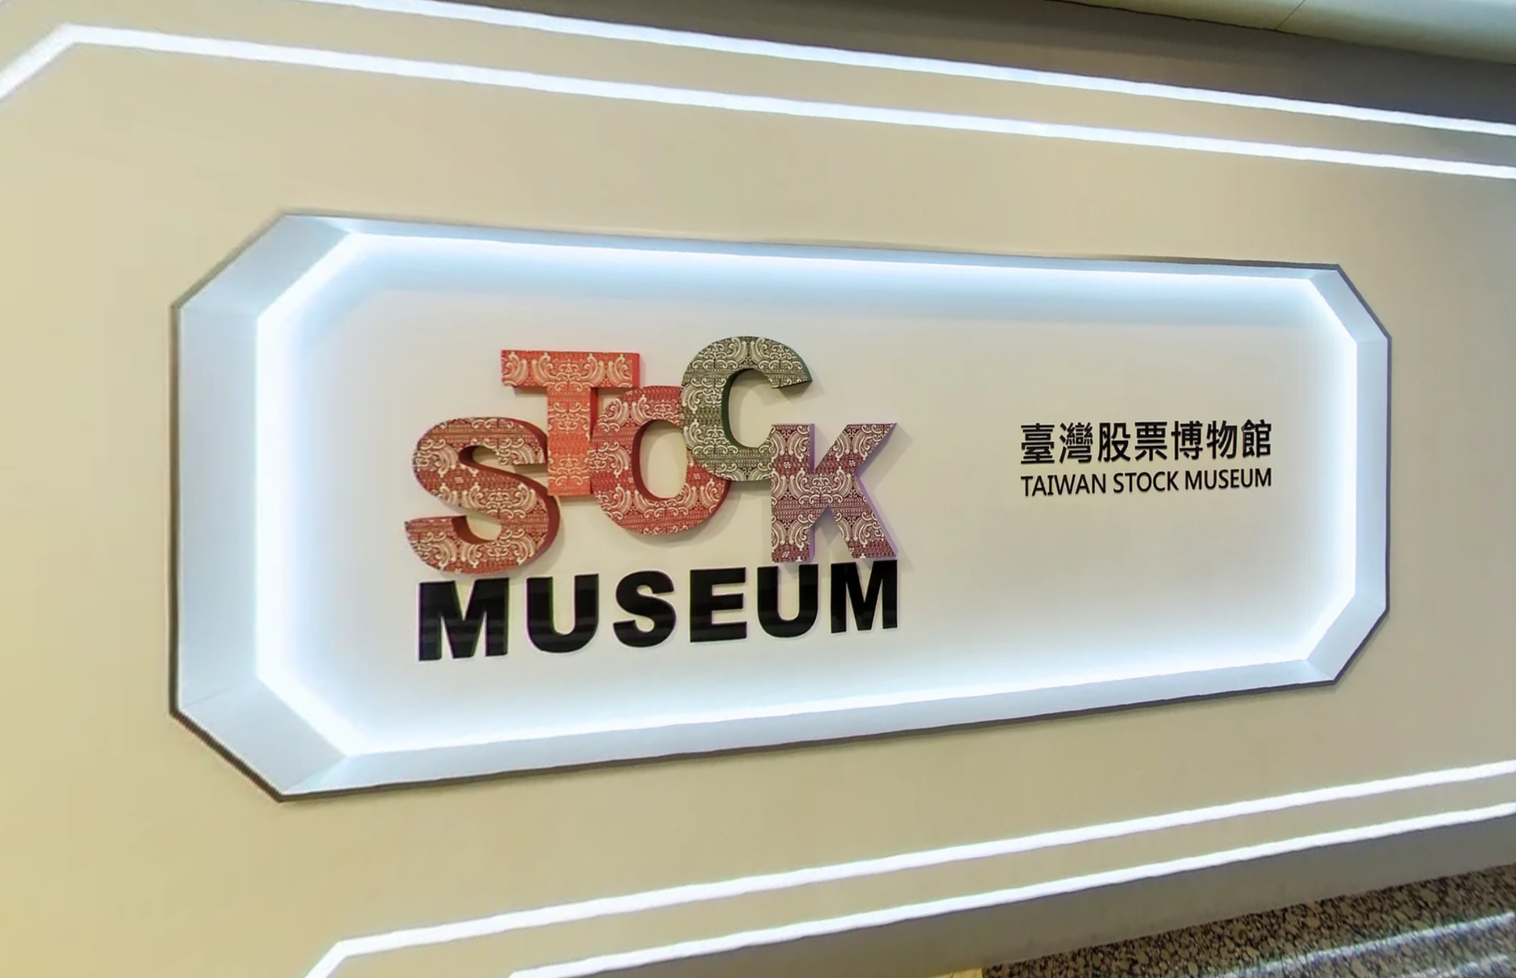 01.歡迎來到股票博物館
Welcome to Taiwan Stock Museum
